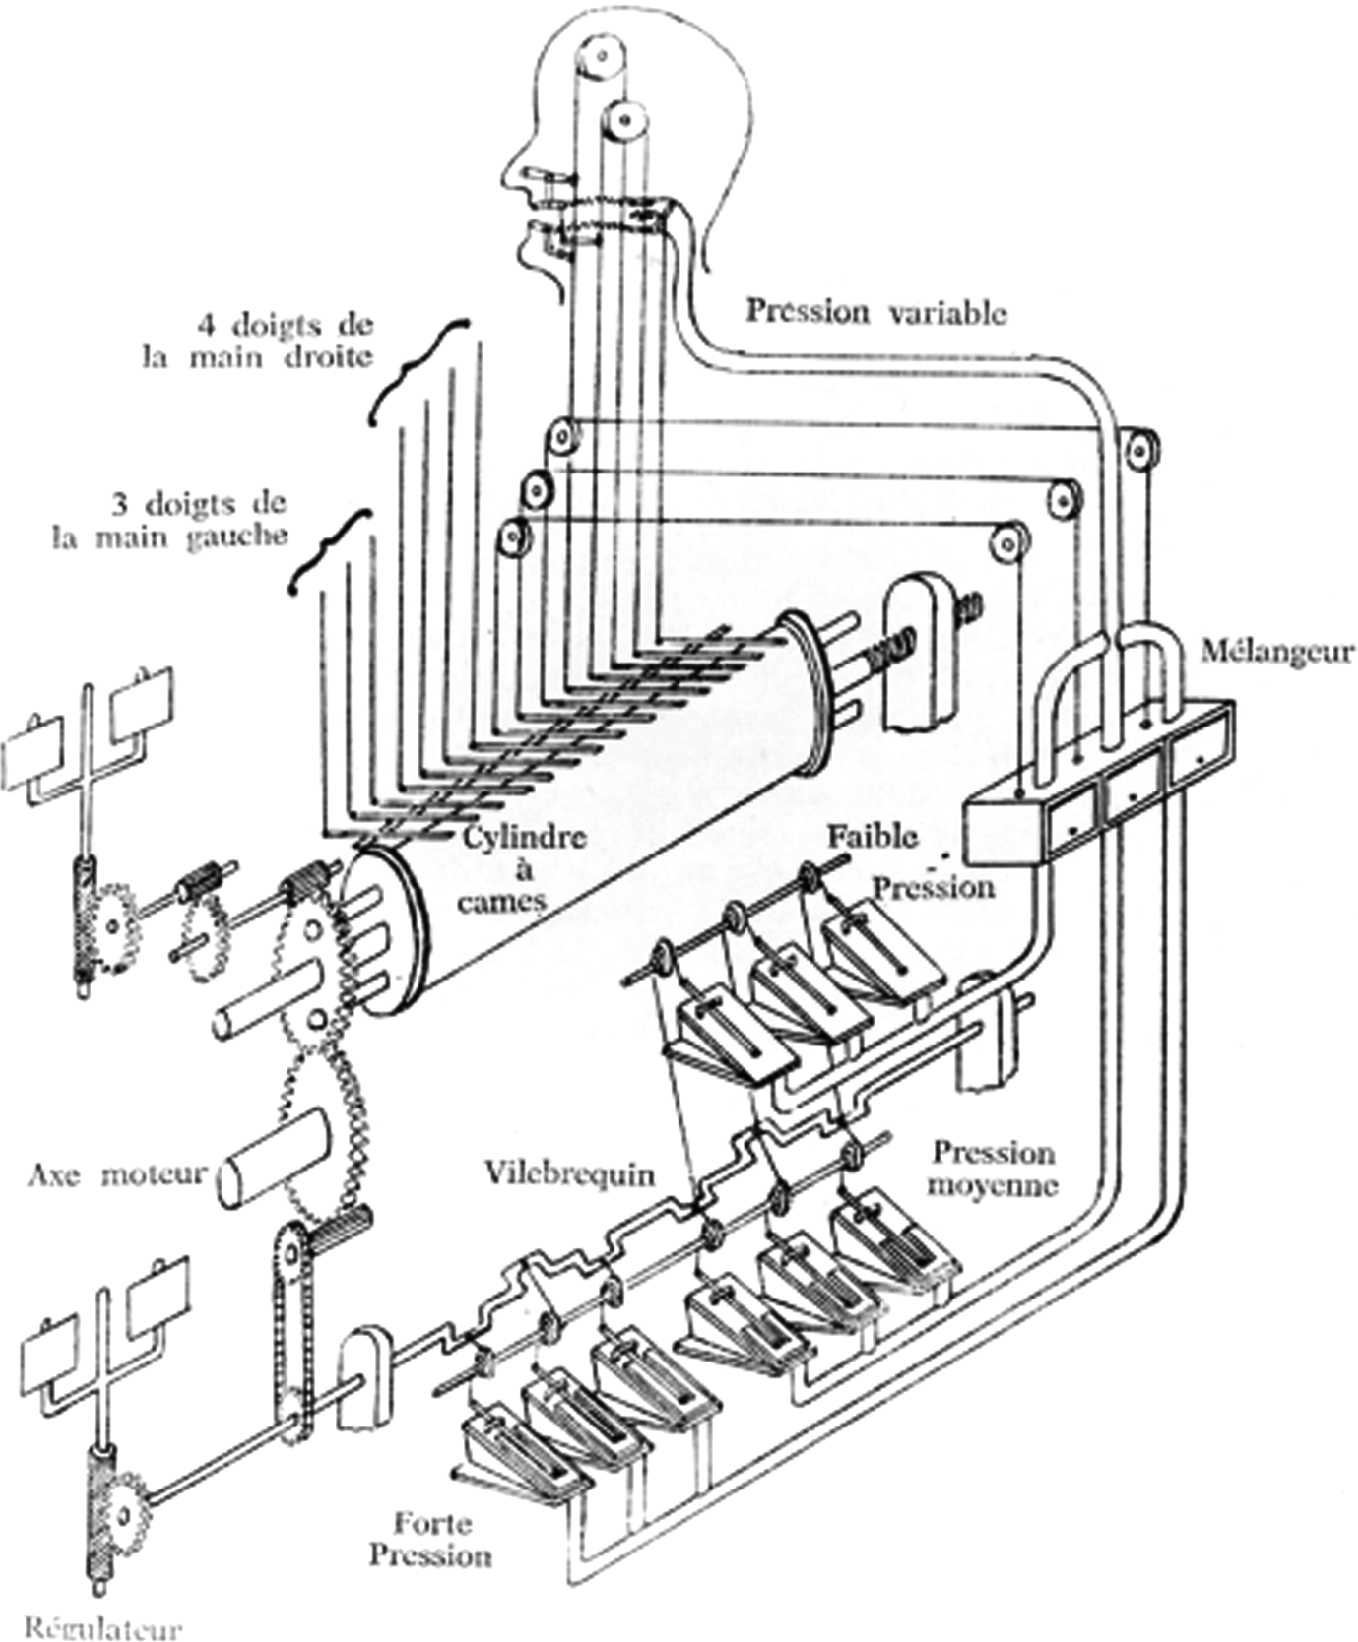 Diagram of Flute Player's Mechanics